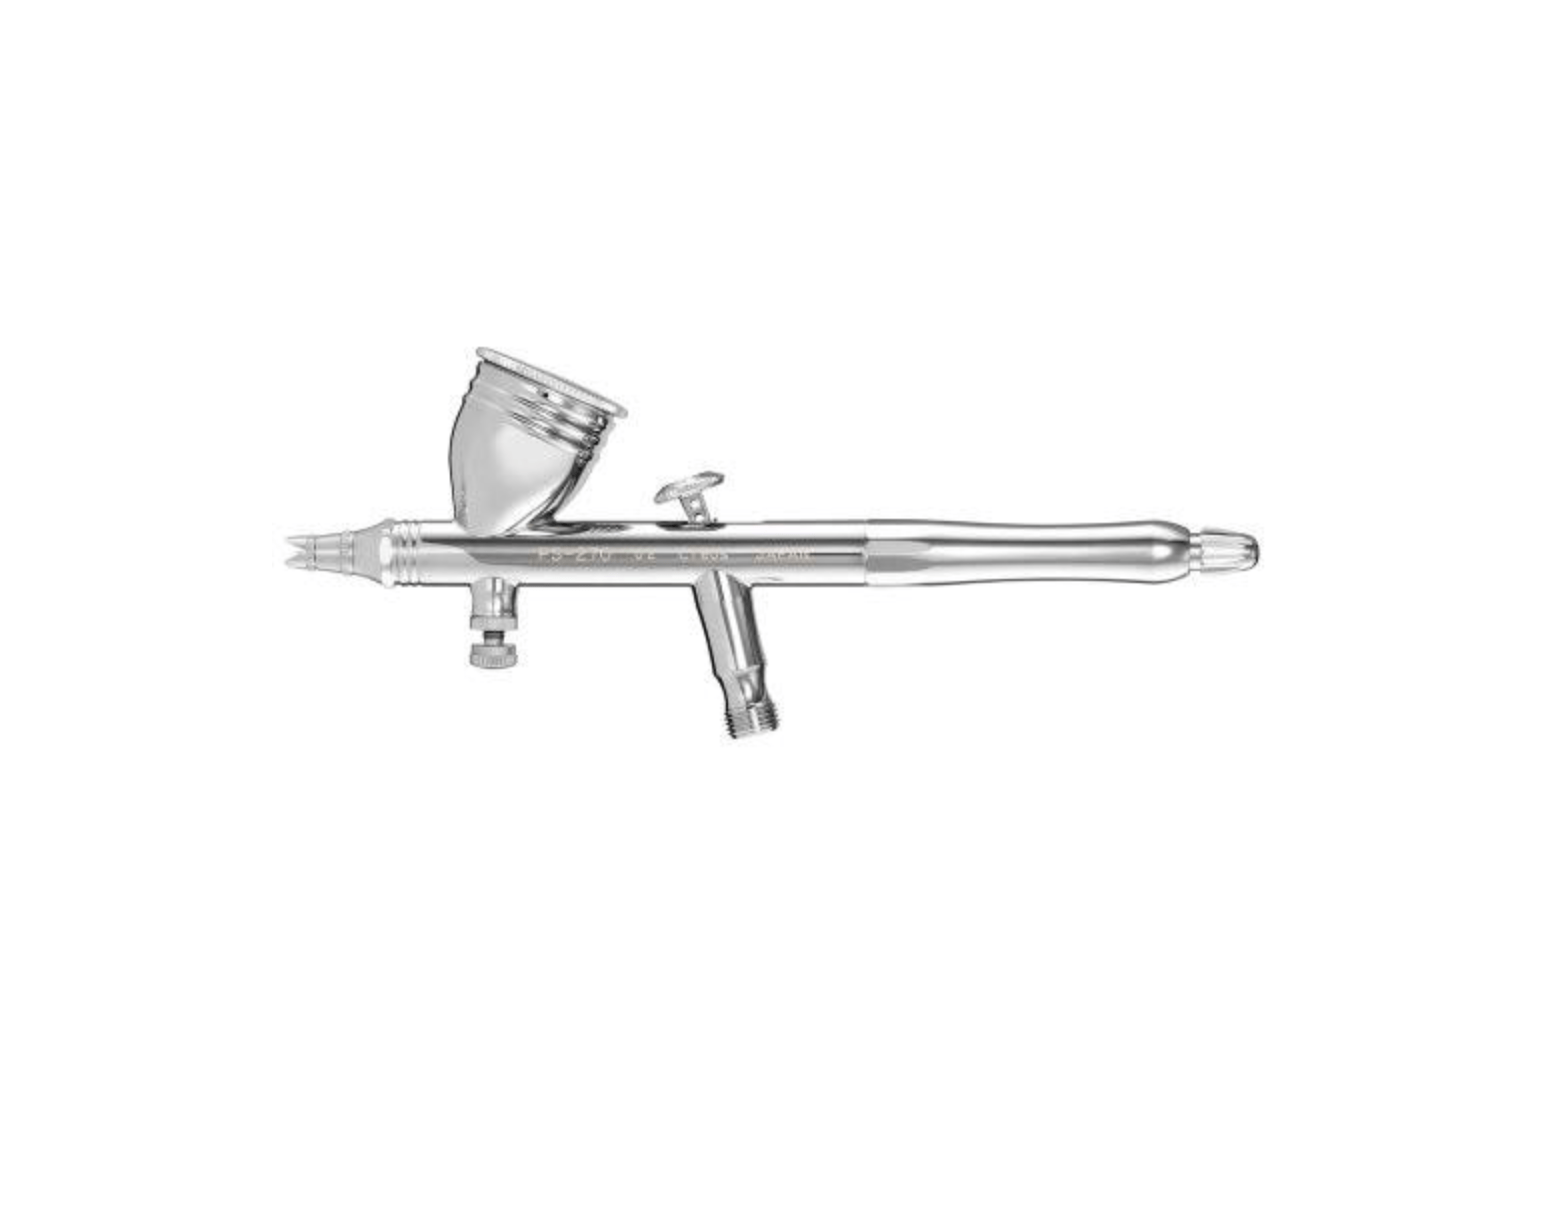 Airbrush Replacement Metal Gun - Universal fitting many models